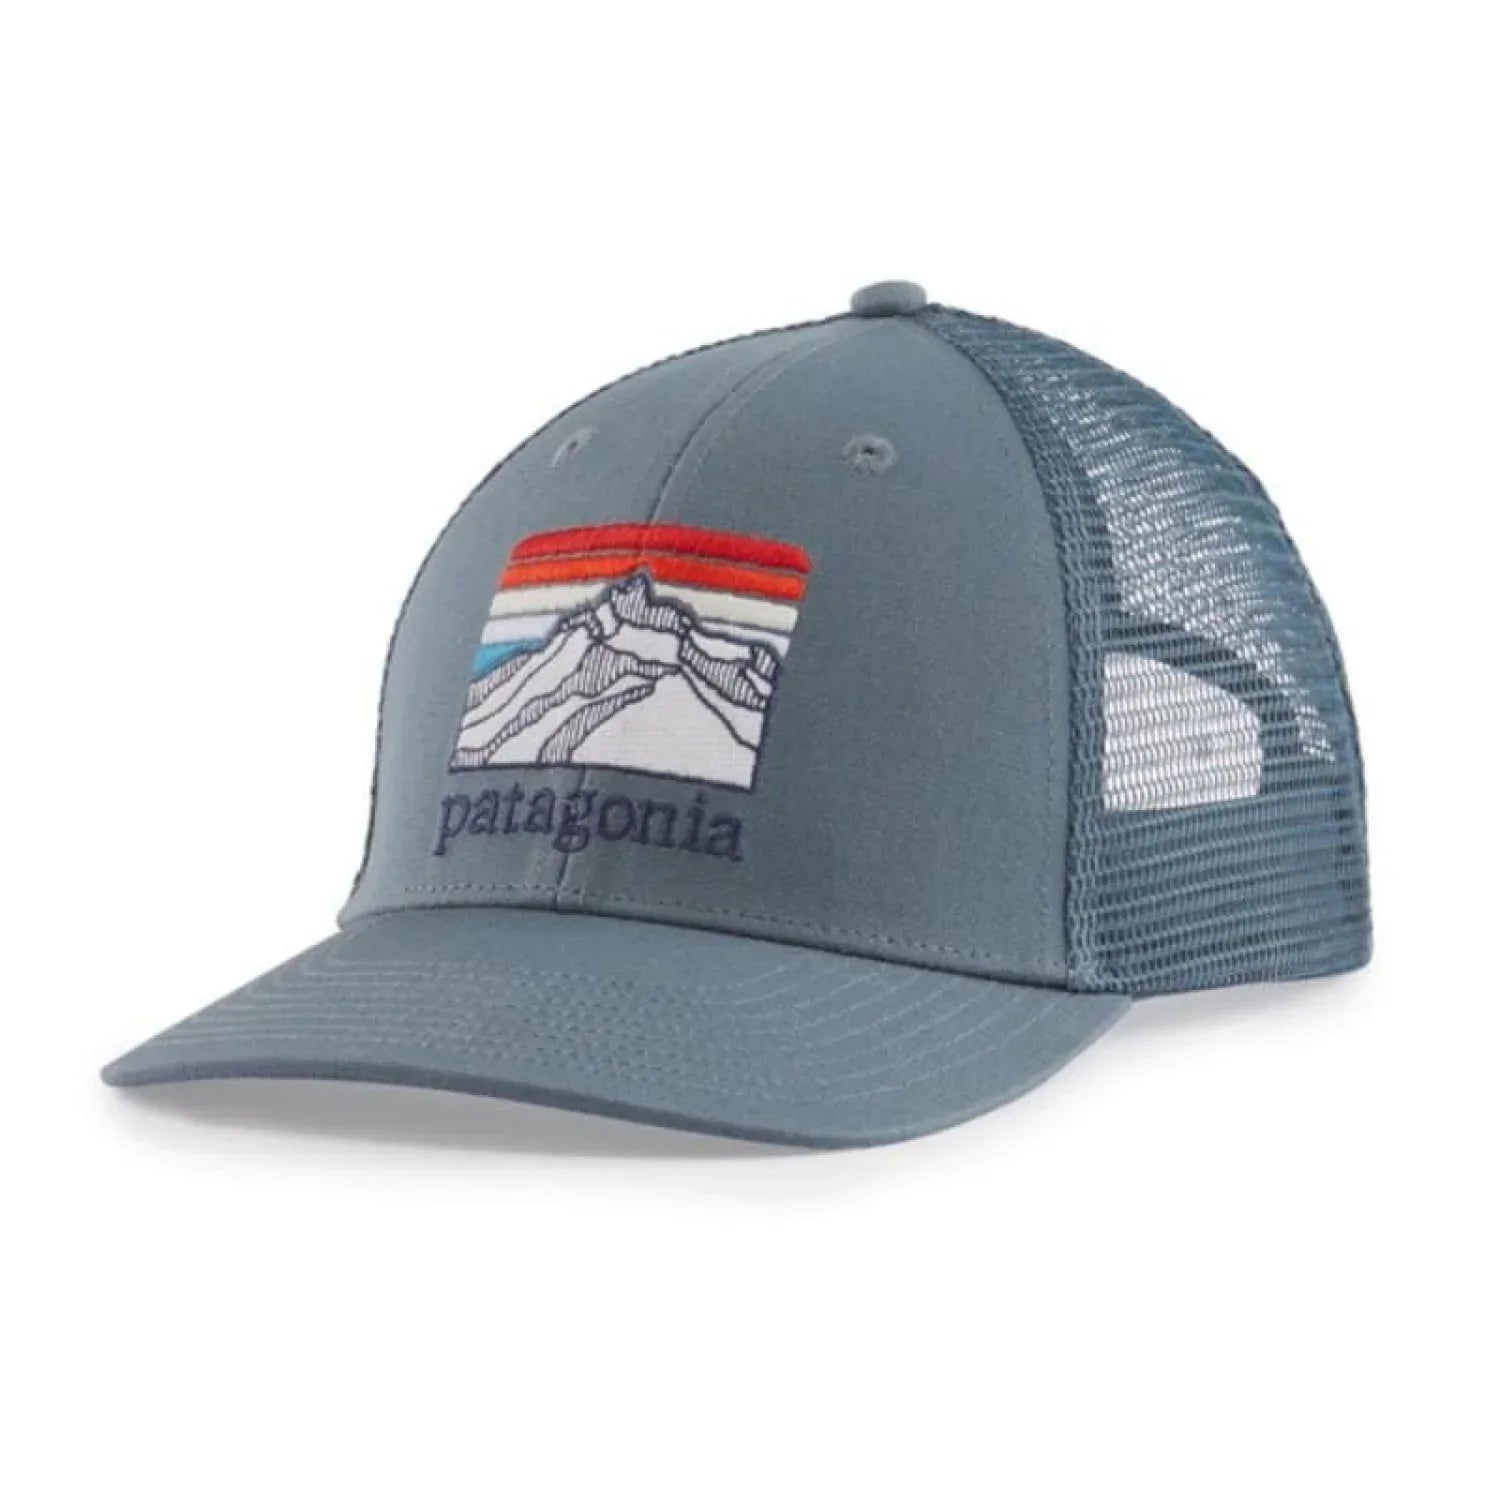 Patagonia HATS - HATS BILLED - HATS BILLED Line Logo Ridge LoPro Trucker Hat PLGY PLUME GREY